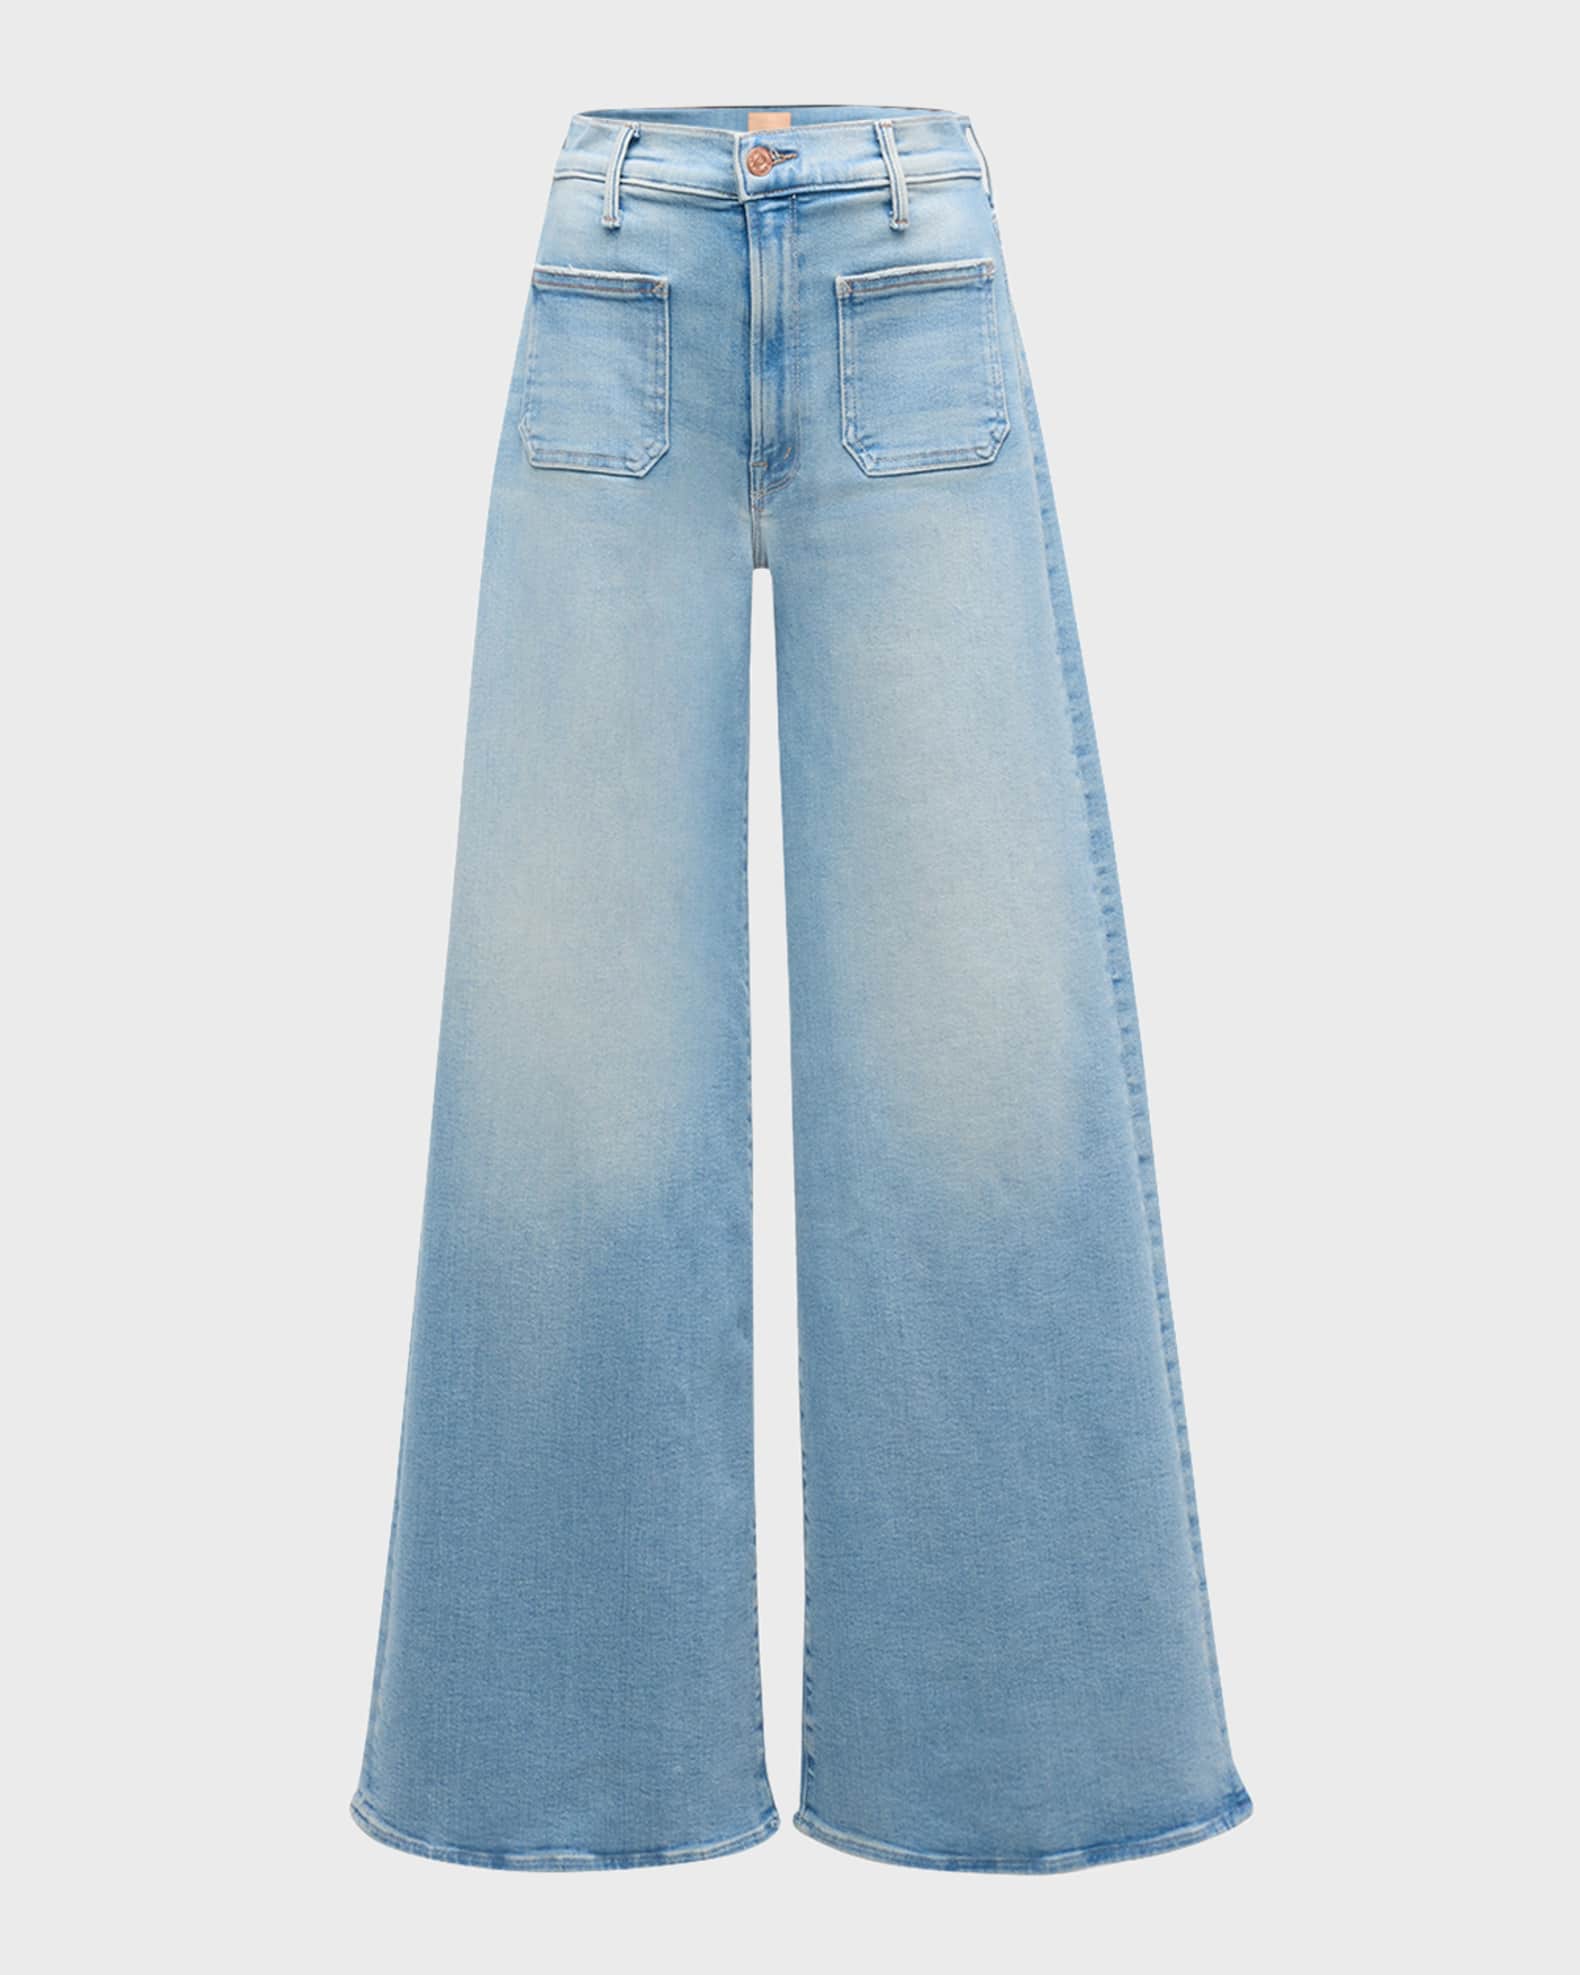 MOTHER Patch Pocket Undercover Sneak Jeans | Neiman Marcus